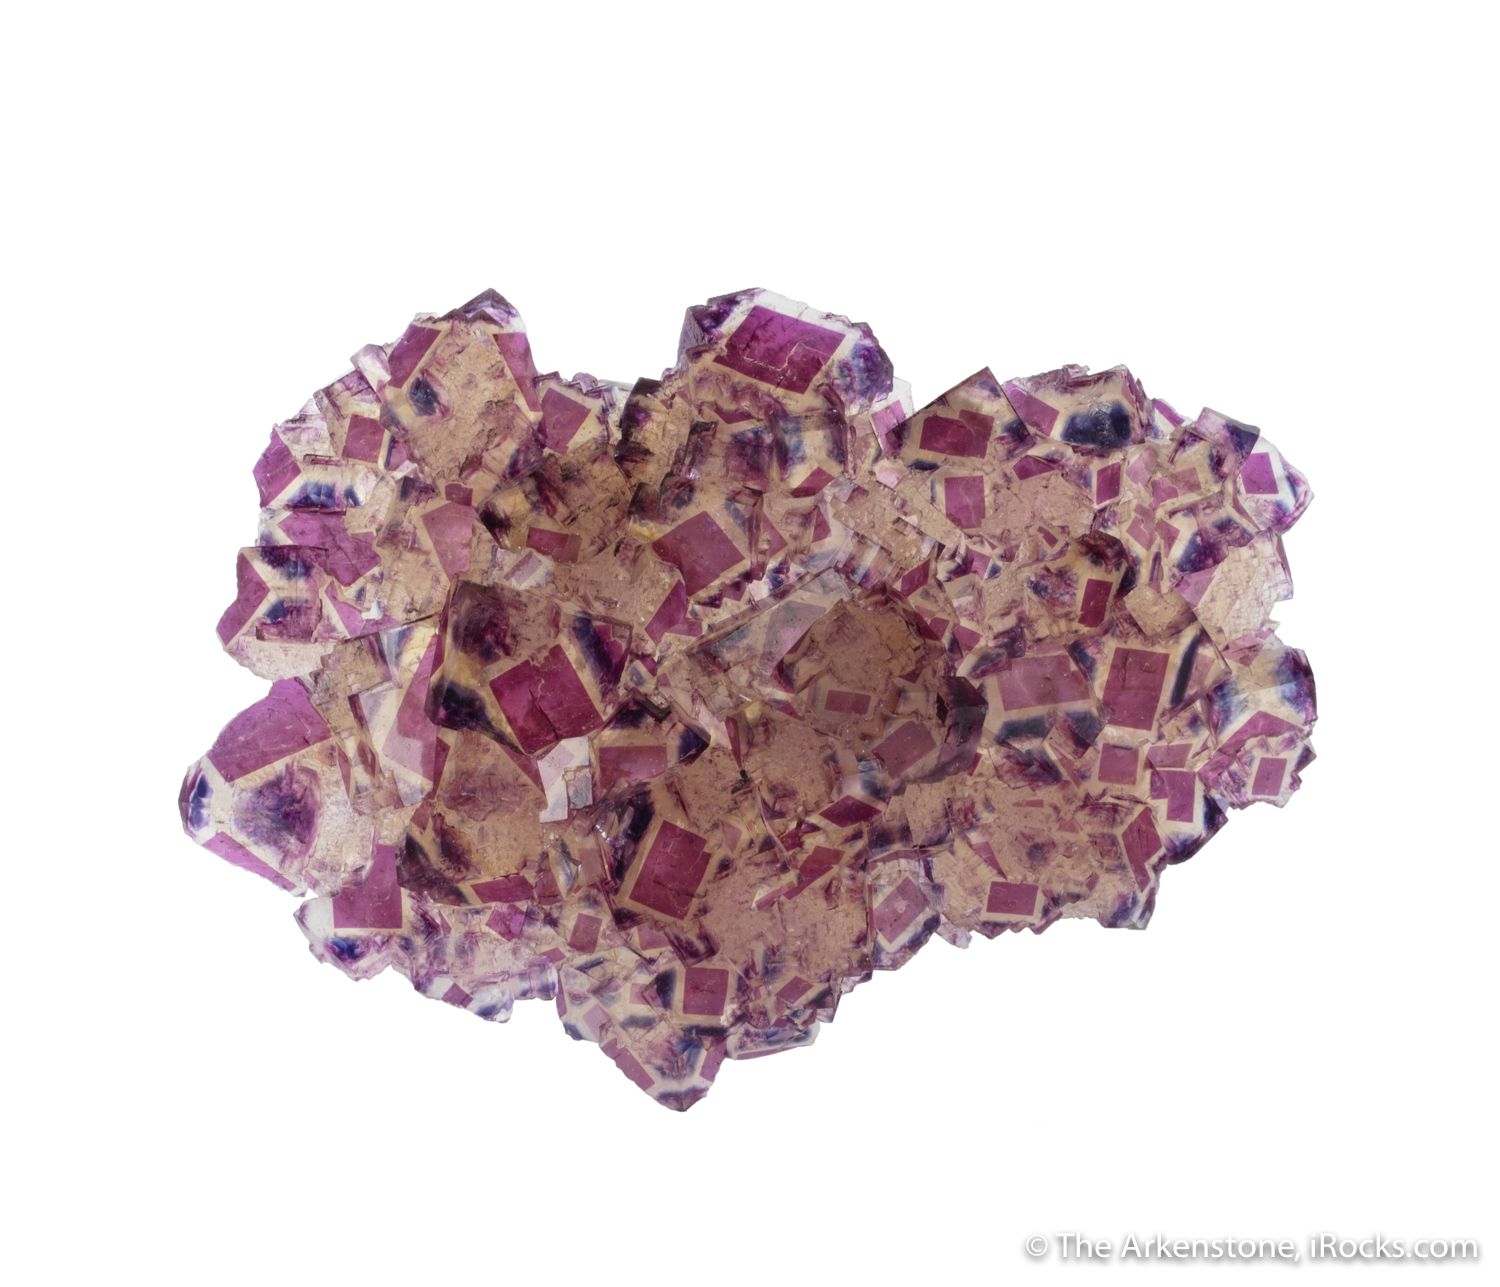 Fluorite - PPP20-07 - Polish Prodigy Pocket - Namibia Mineral Specimen